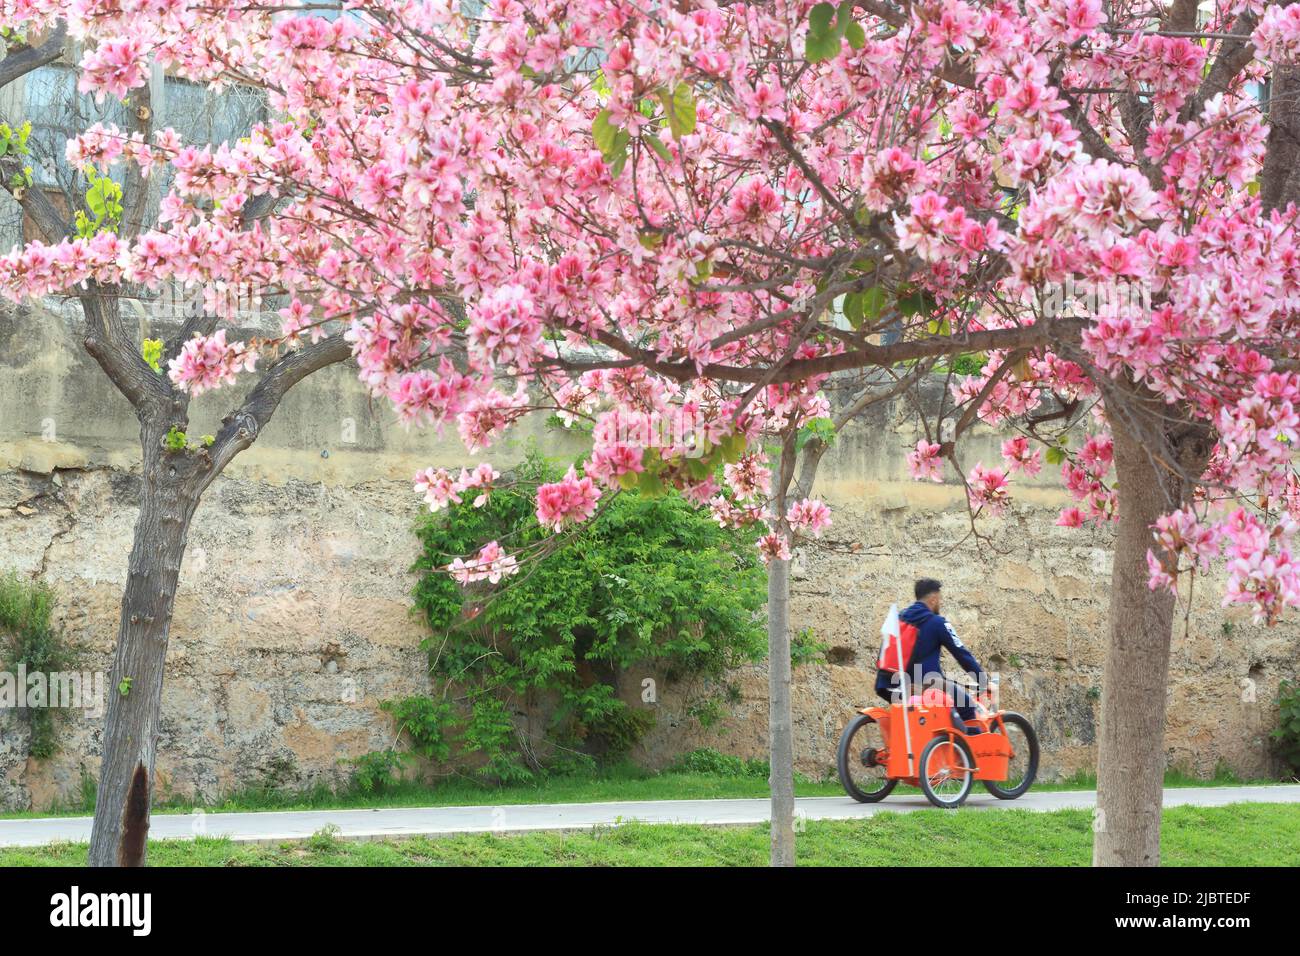 Spain, Valencia, Turia Gardens (Jardín del Turia), shared bike in the public park opened in 1986, trees in bloom in spring Stock Photo